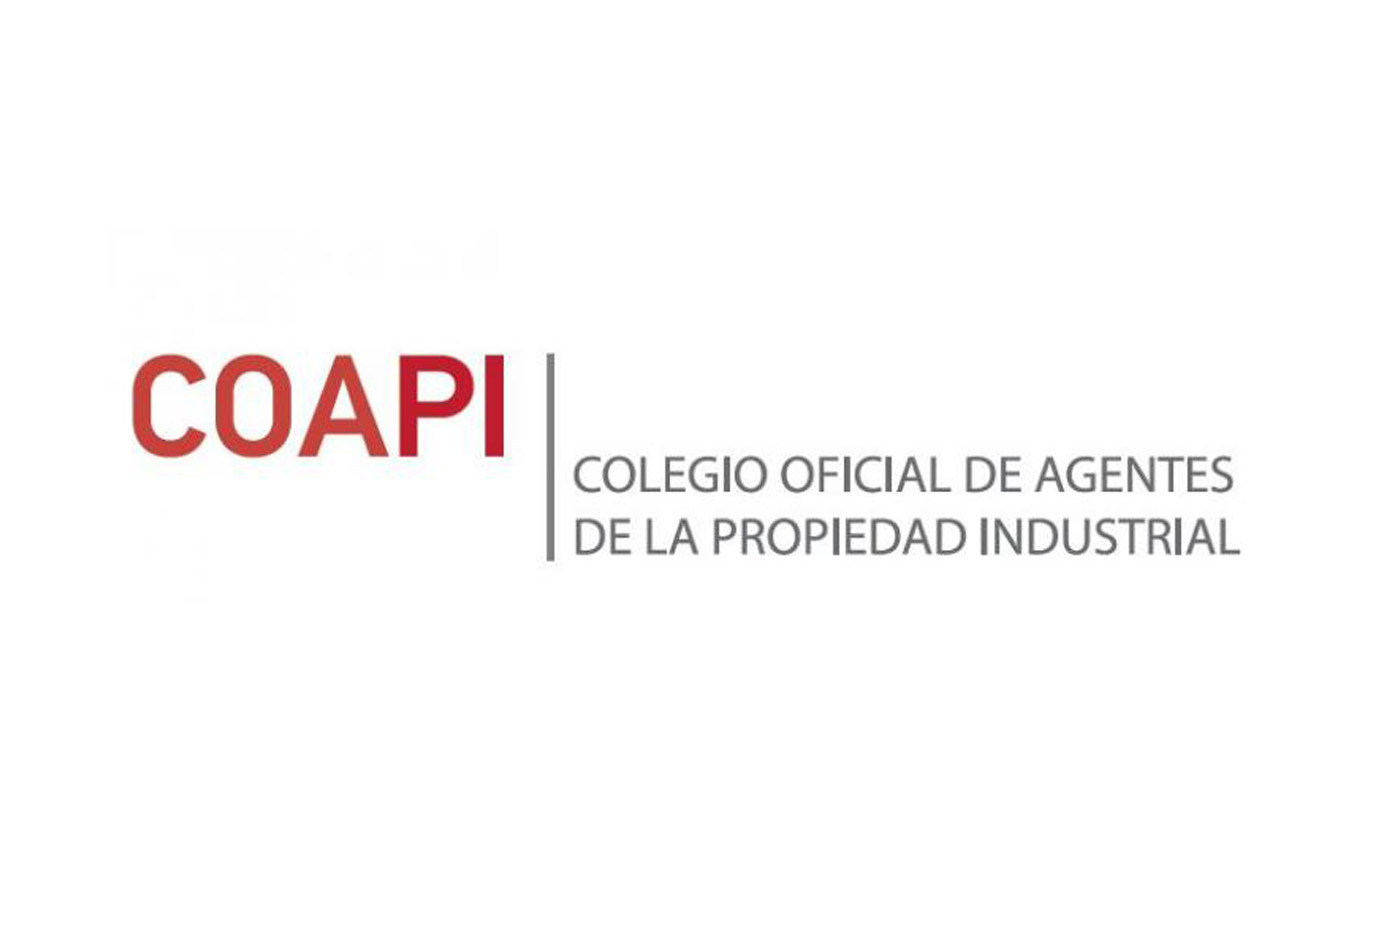 COAPI logo intellectual property agents